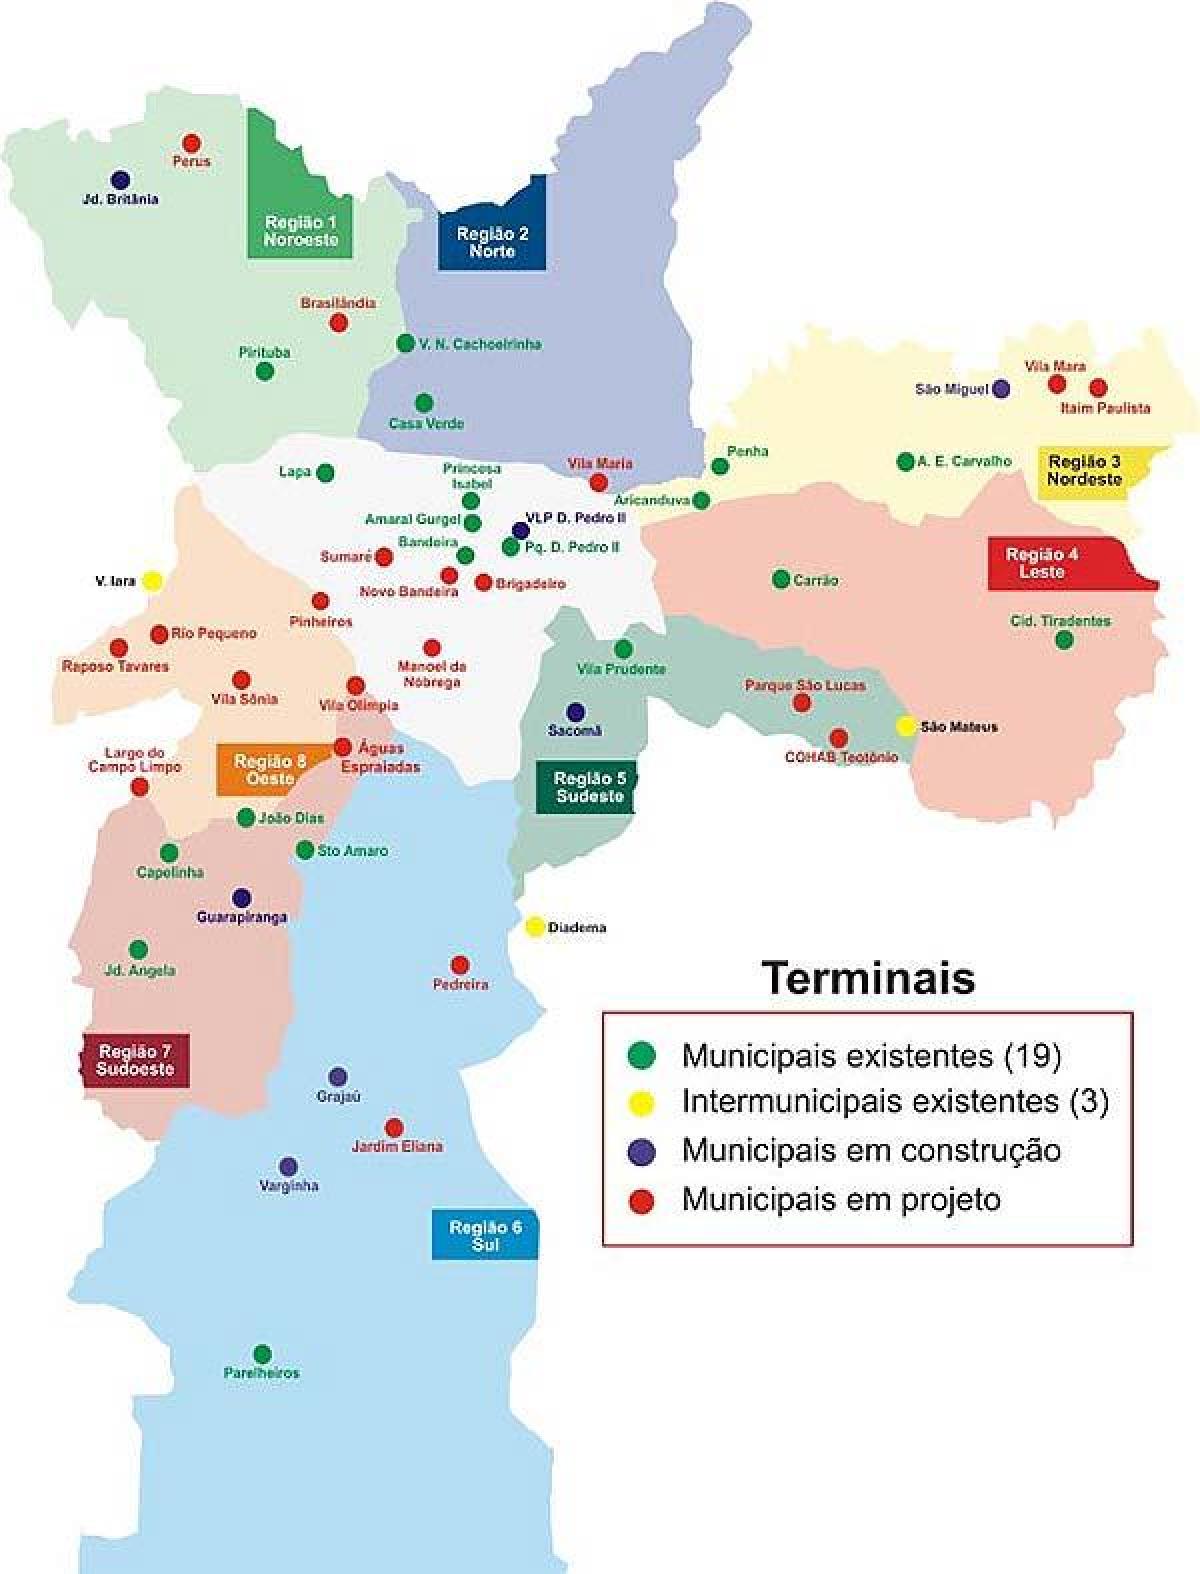 Map of terminals bus of São Paulo